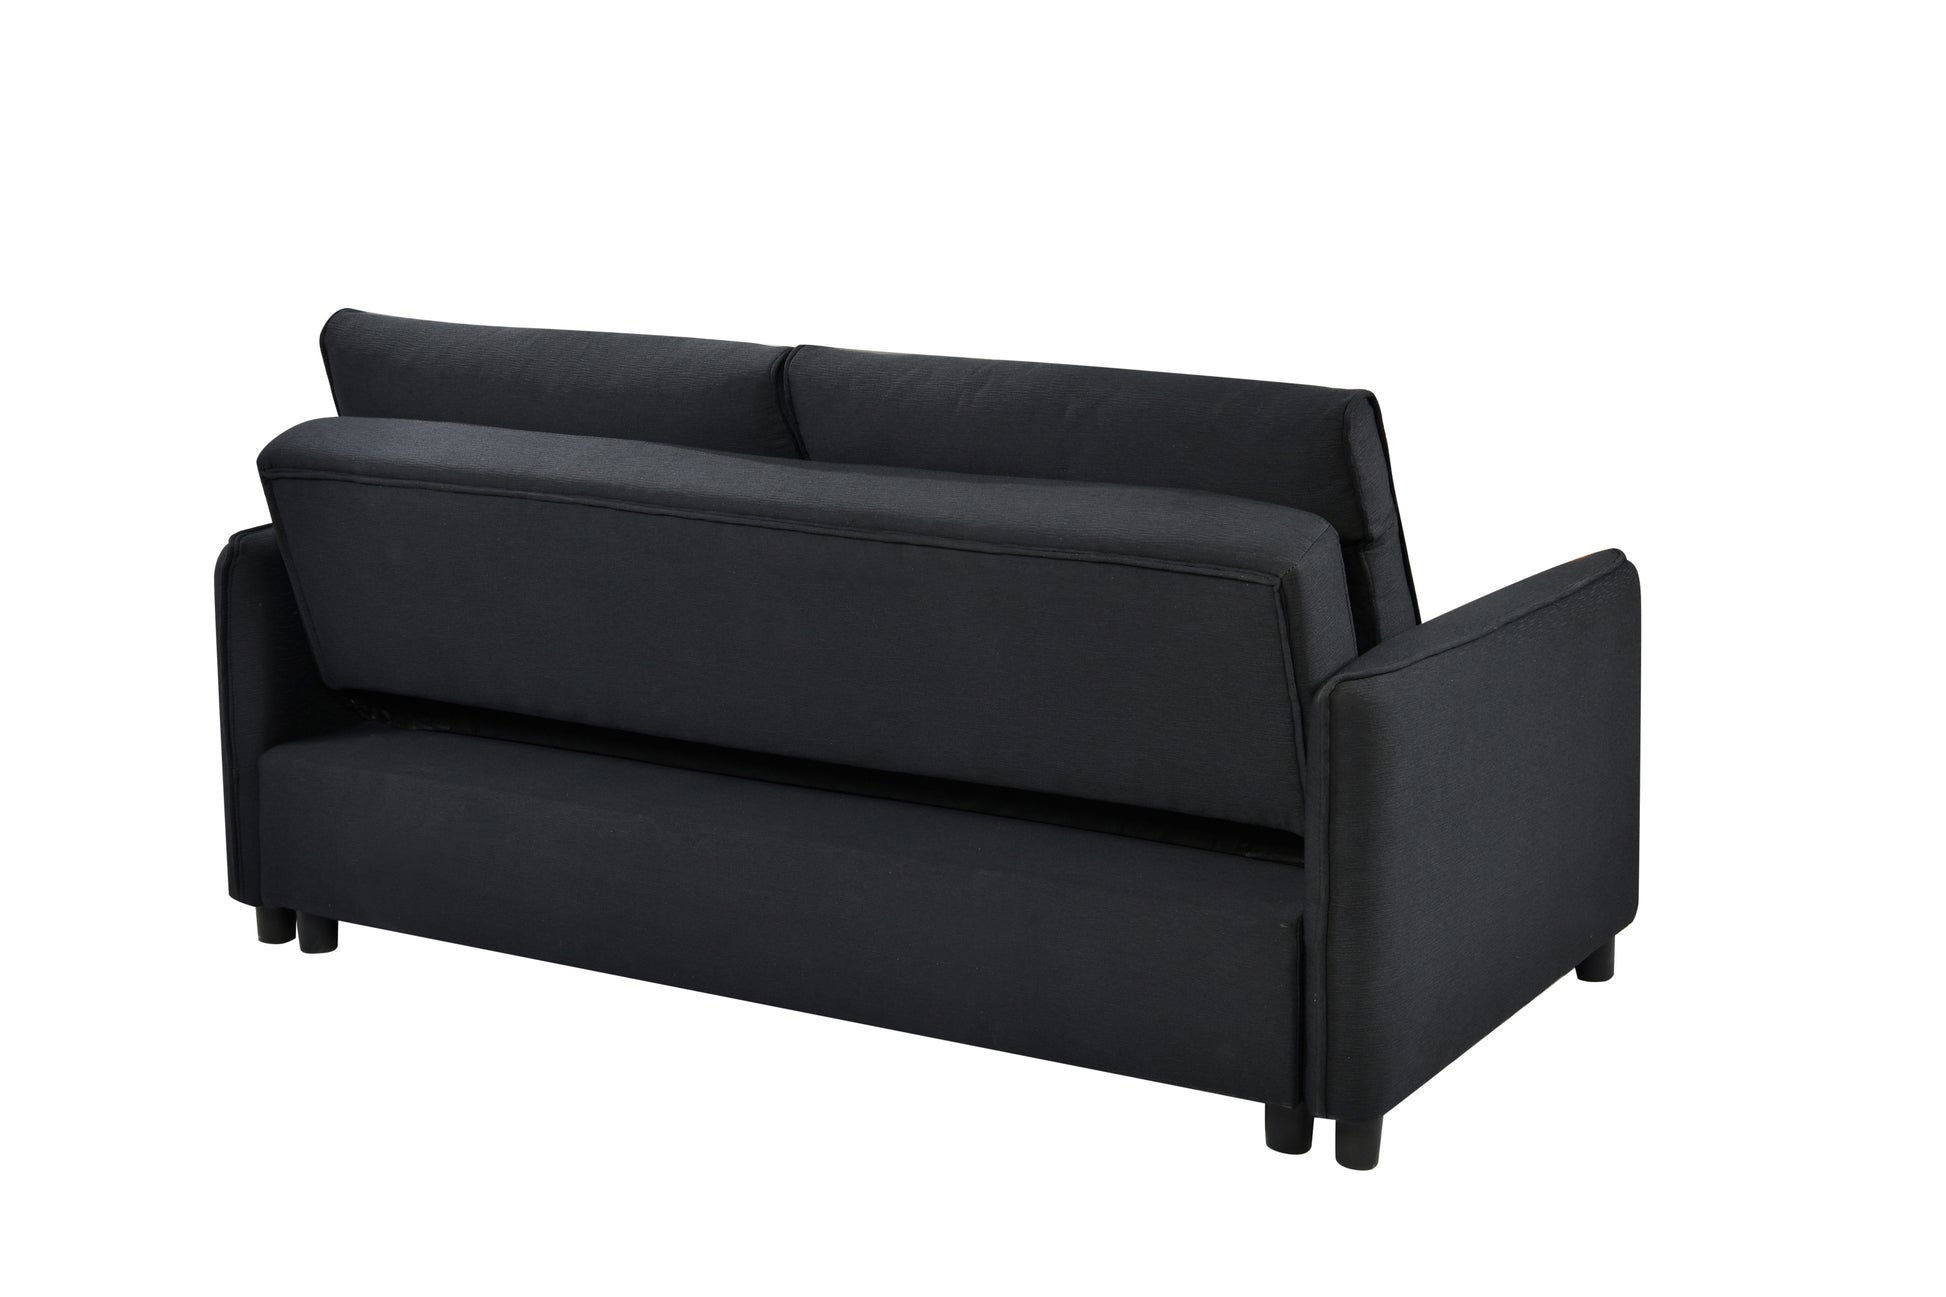 Loveseat Futon: 3-in-1 Sleeper Sofa Bed, Reclining Back